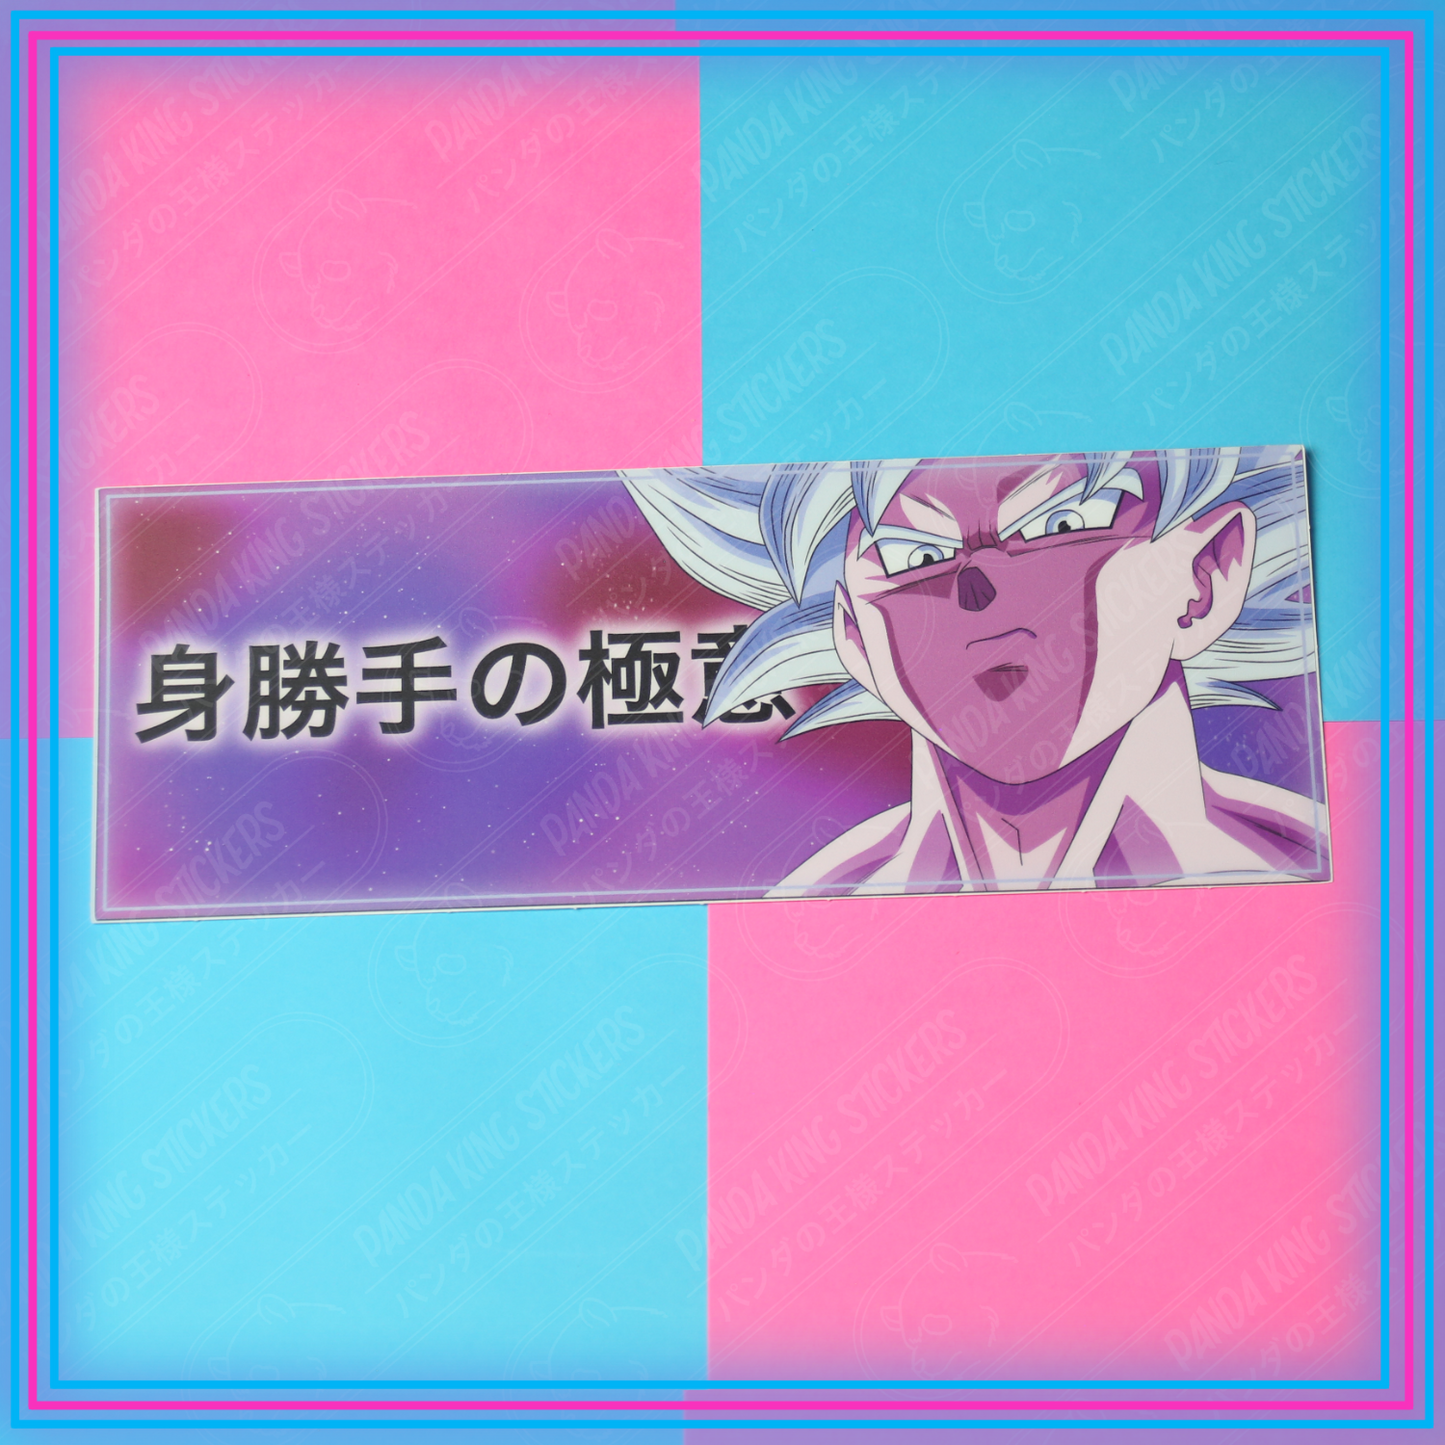 Goku “Ultra Instinct” Slap